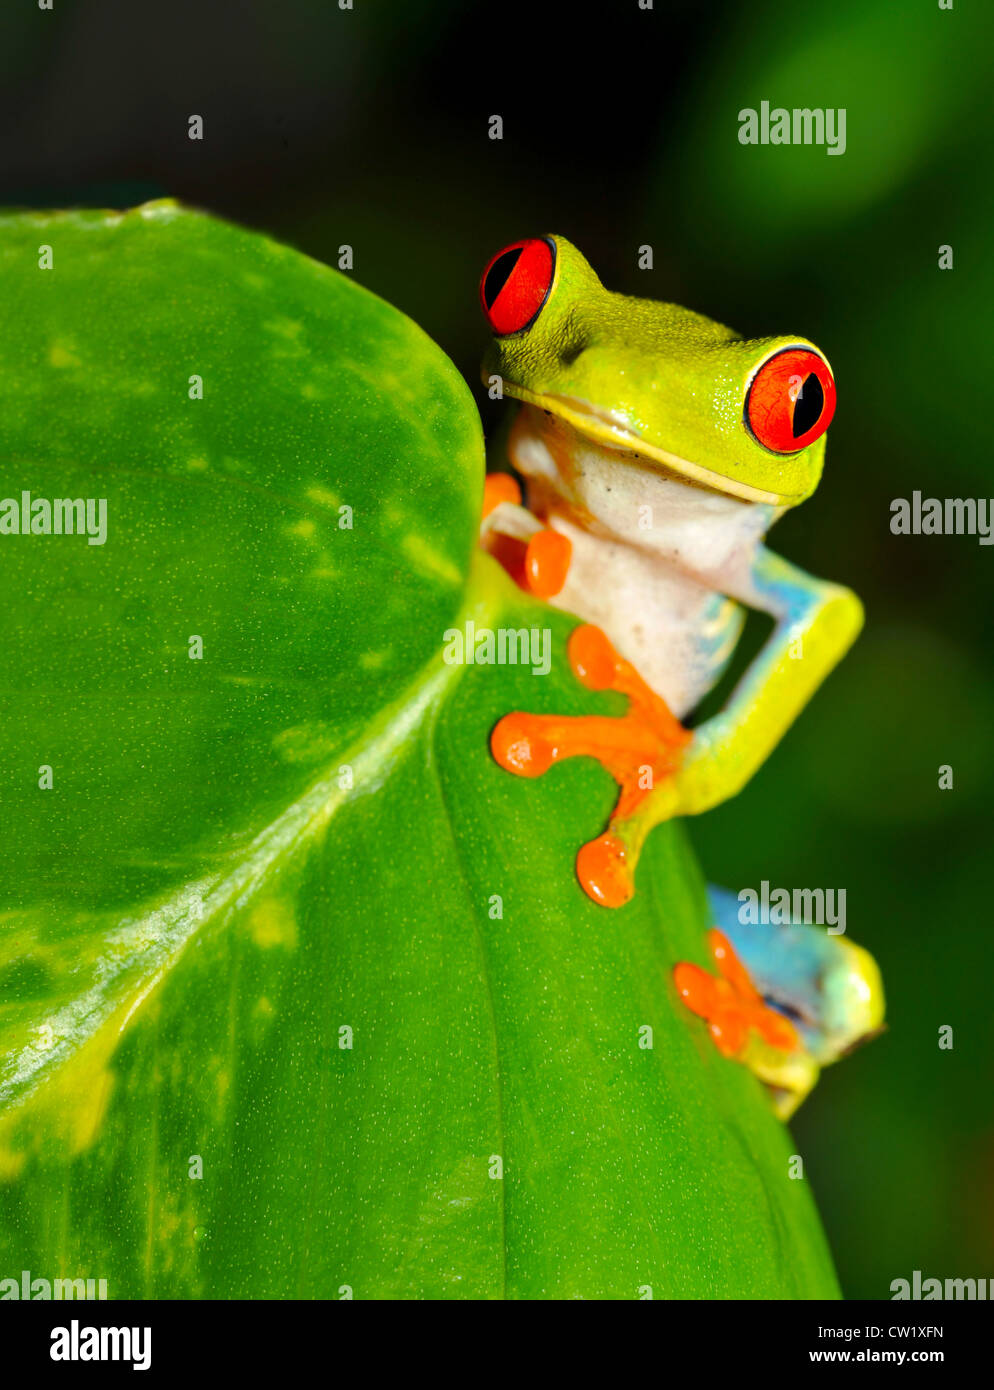 Red eyed green tree frog sur feuille gaudy ou plante banane, le lac Arenal, Costa Rica, Amérique latine.rainfrog amphibiens exotiques jungle Banque D'Images